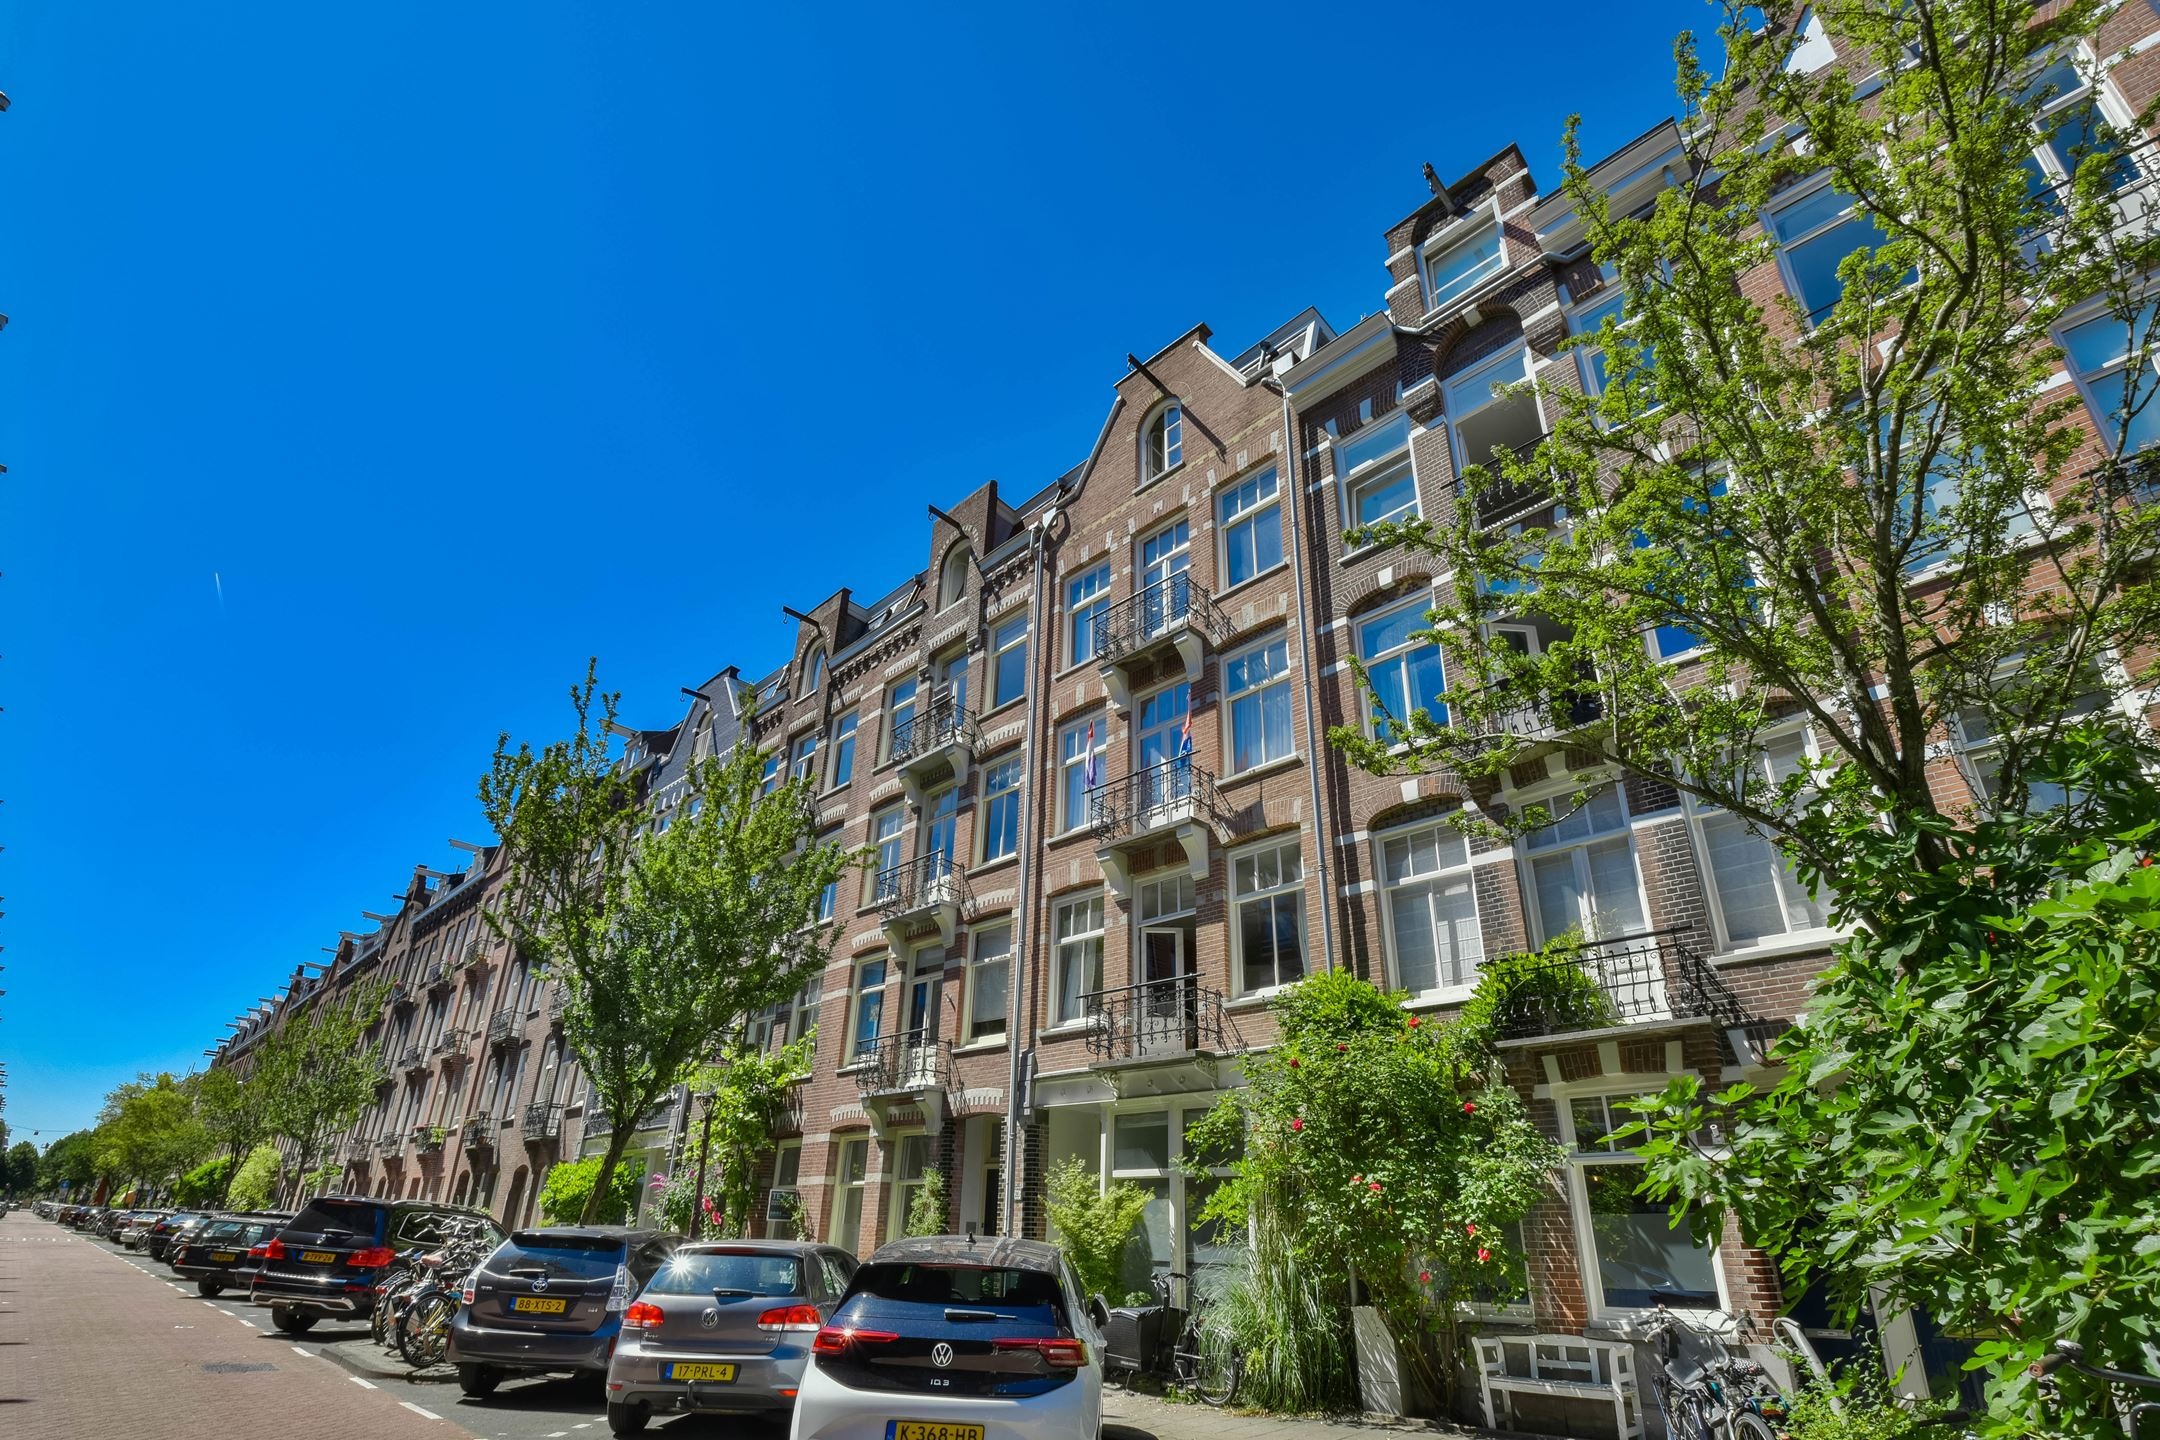 Woning / appartement - Amsterdam - Kanaalstraat 36 1